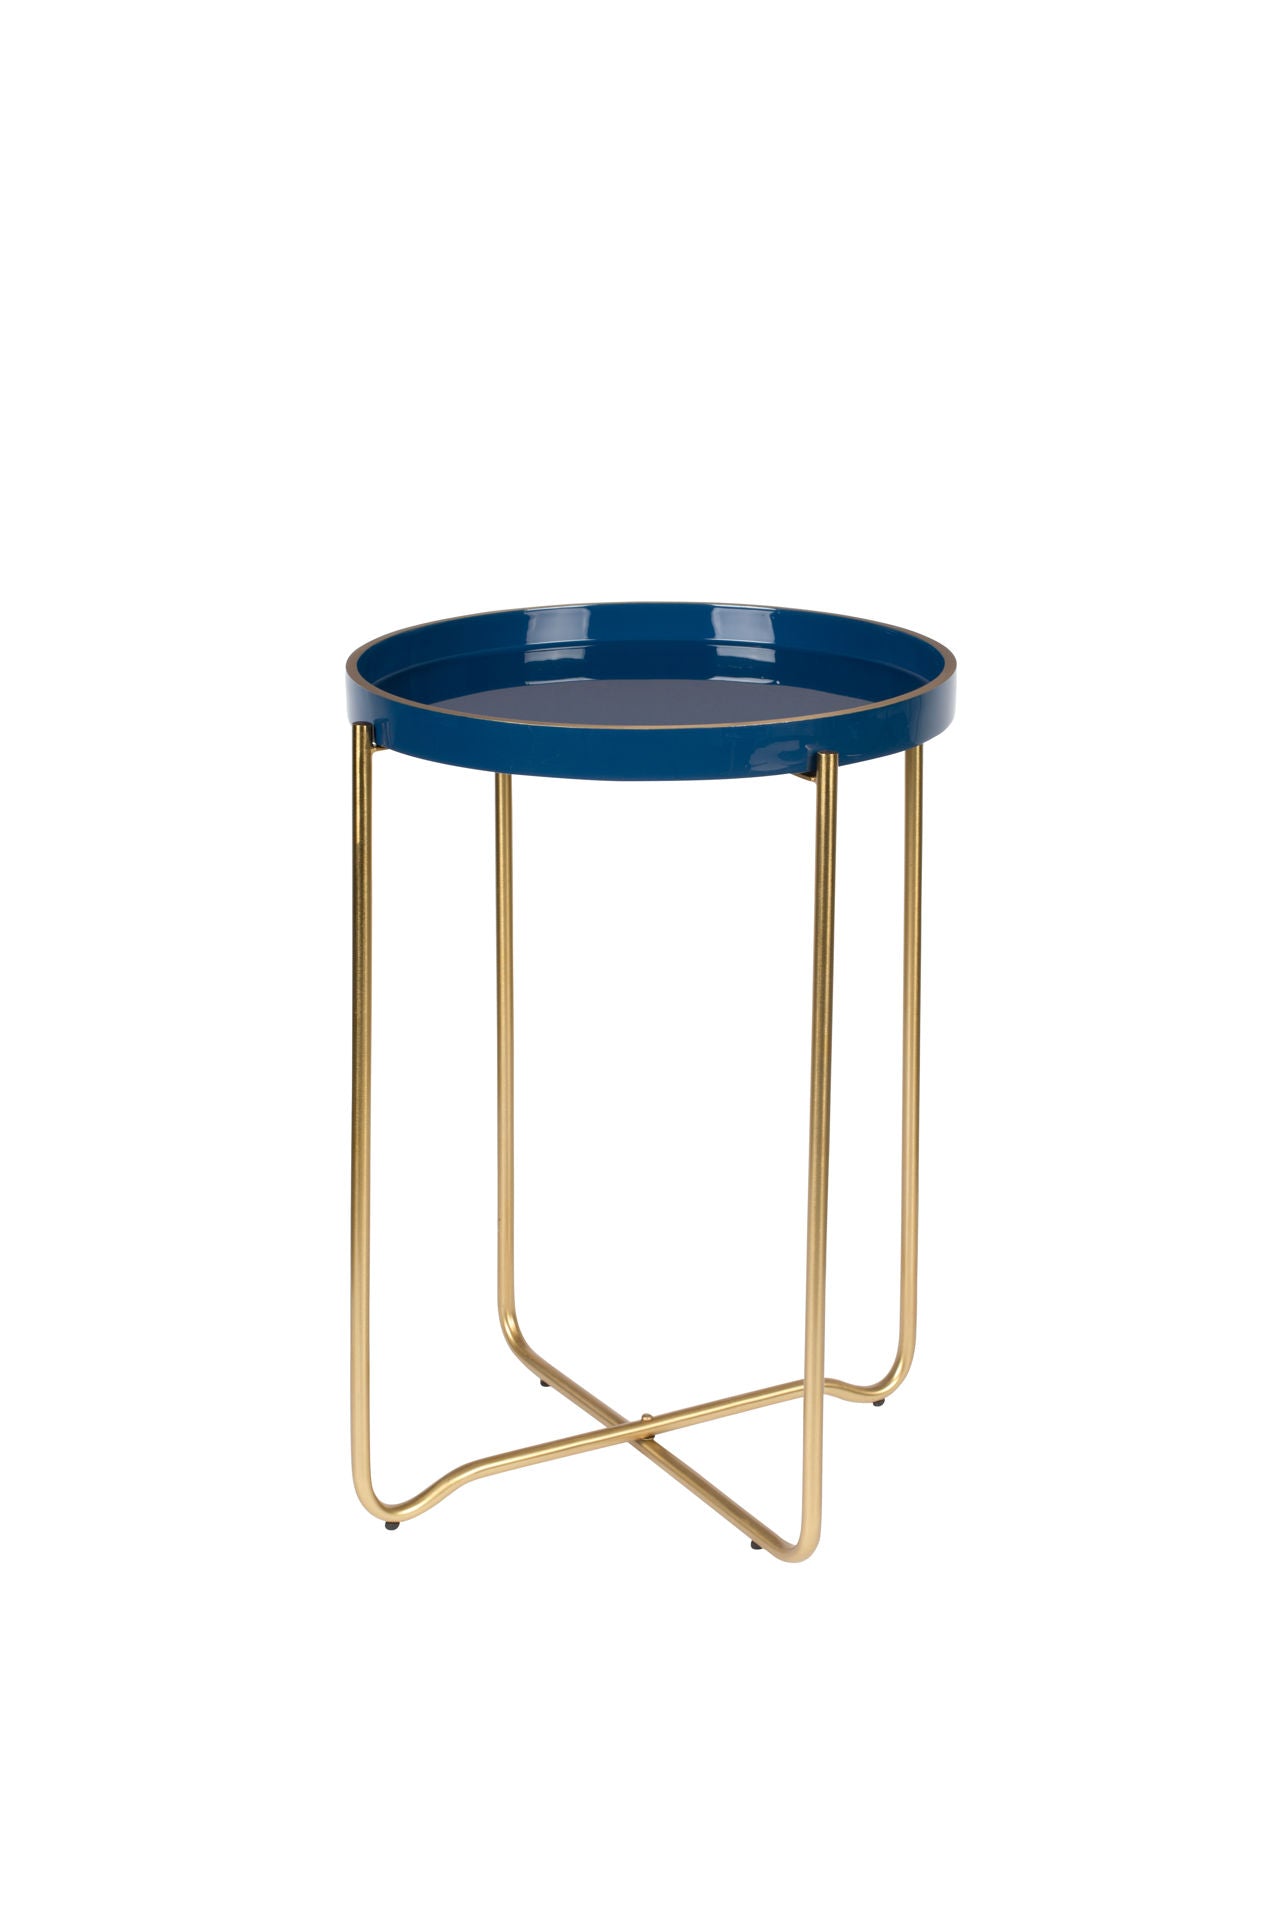 Nancy's Miller Place Table - Modern - Dark Blue - Aluminum, Iron - 42 cm x 42 cm x 55 cm